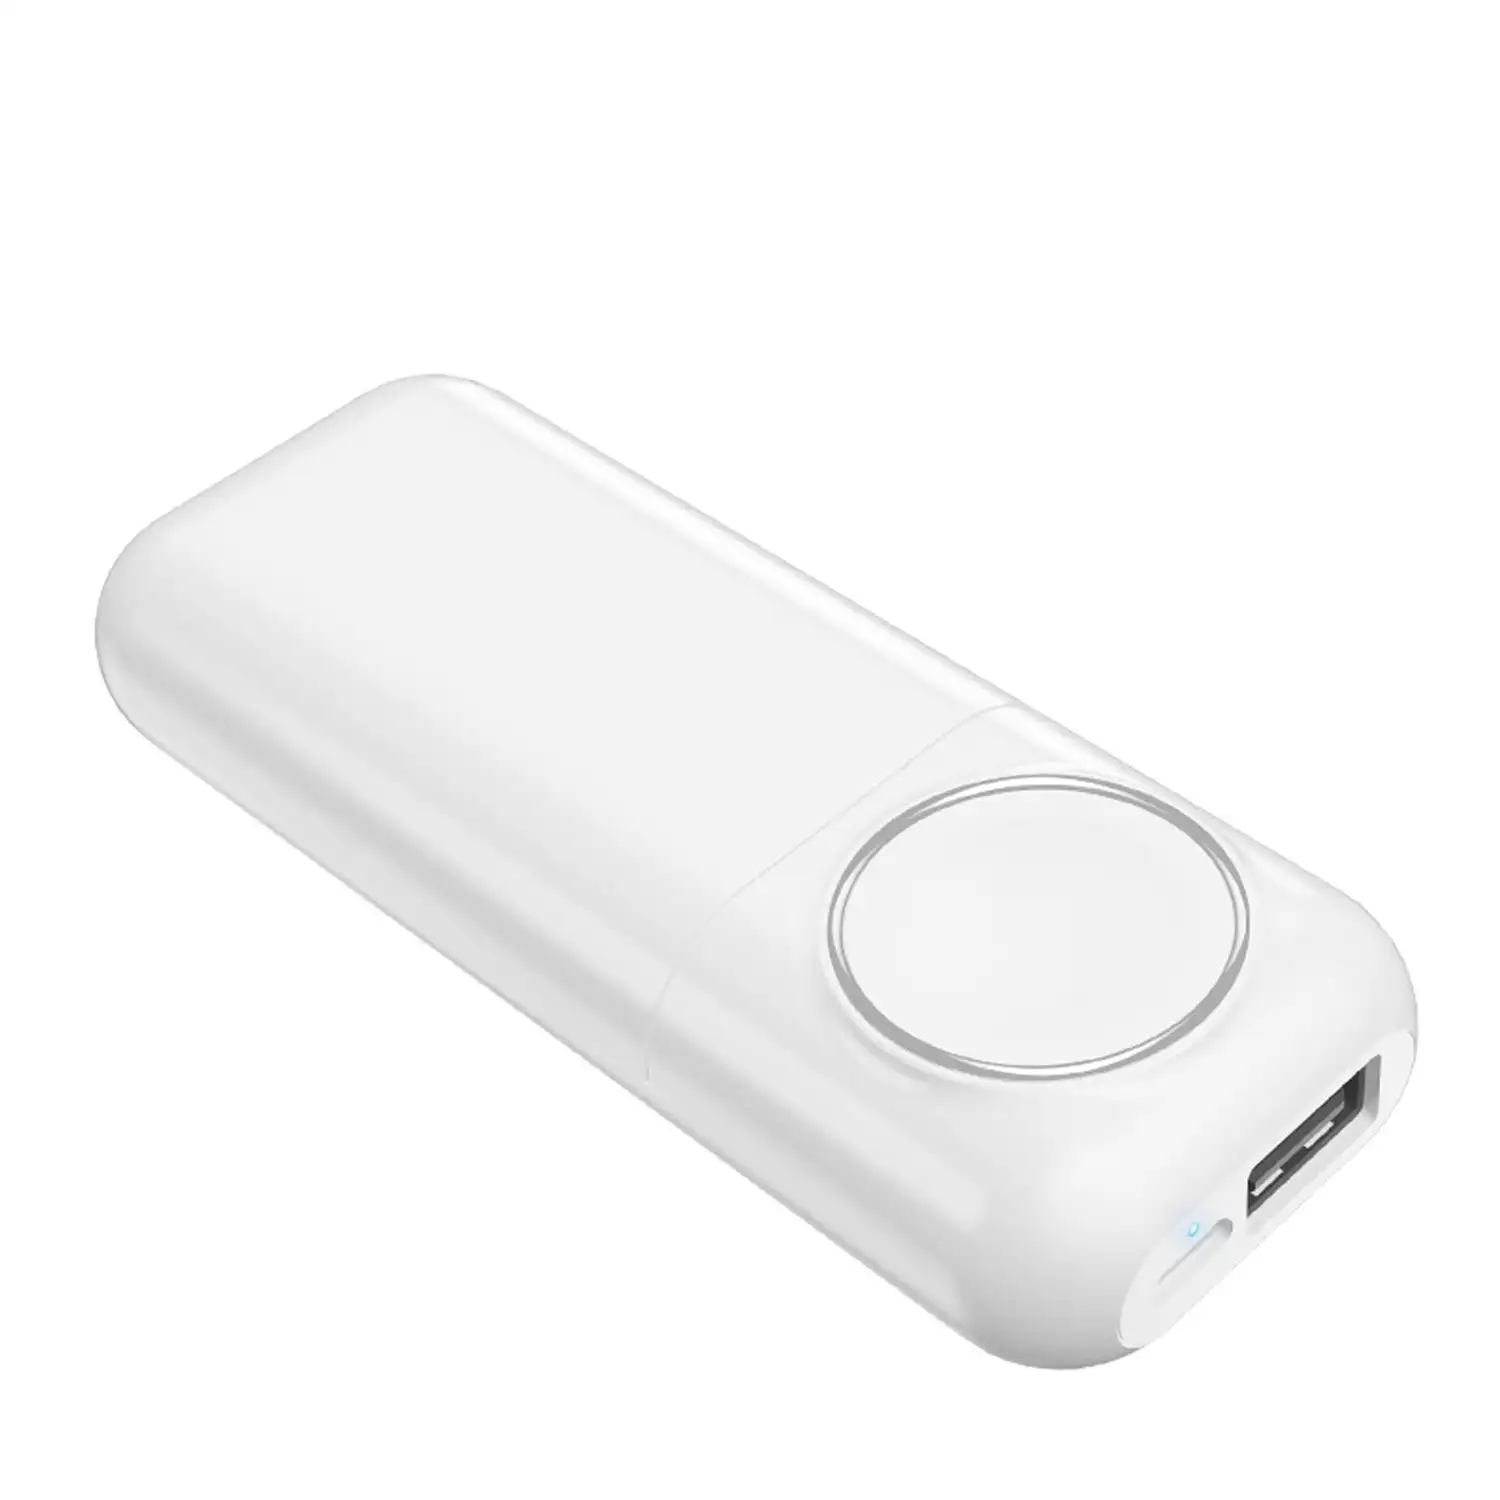 PowerBank para Apple Watch de 10.000mAh salida USB 1A